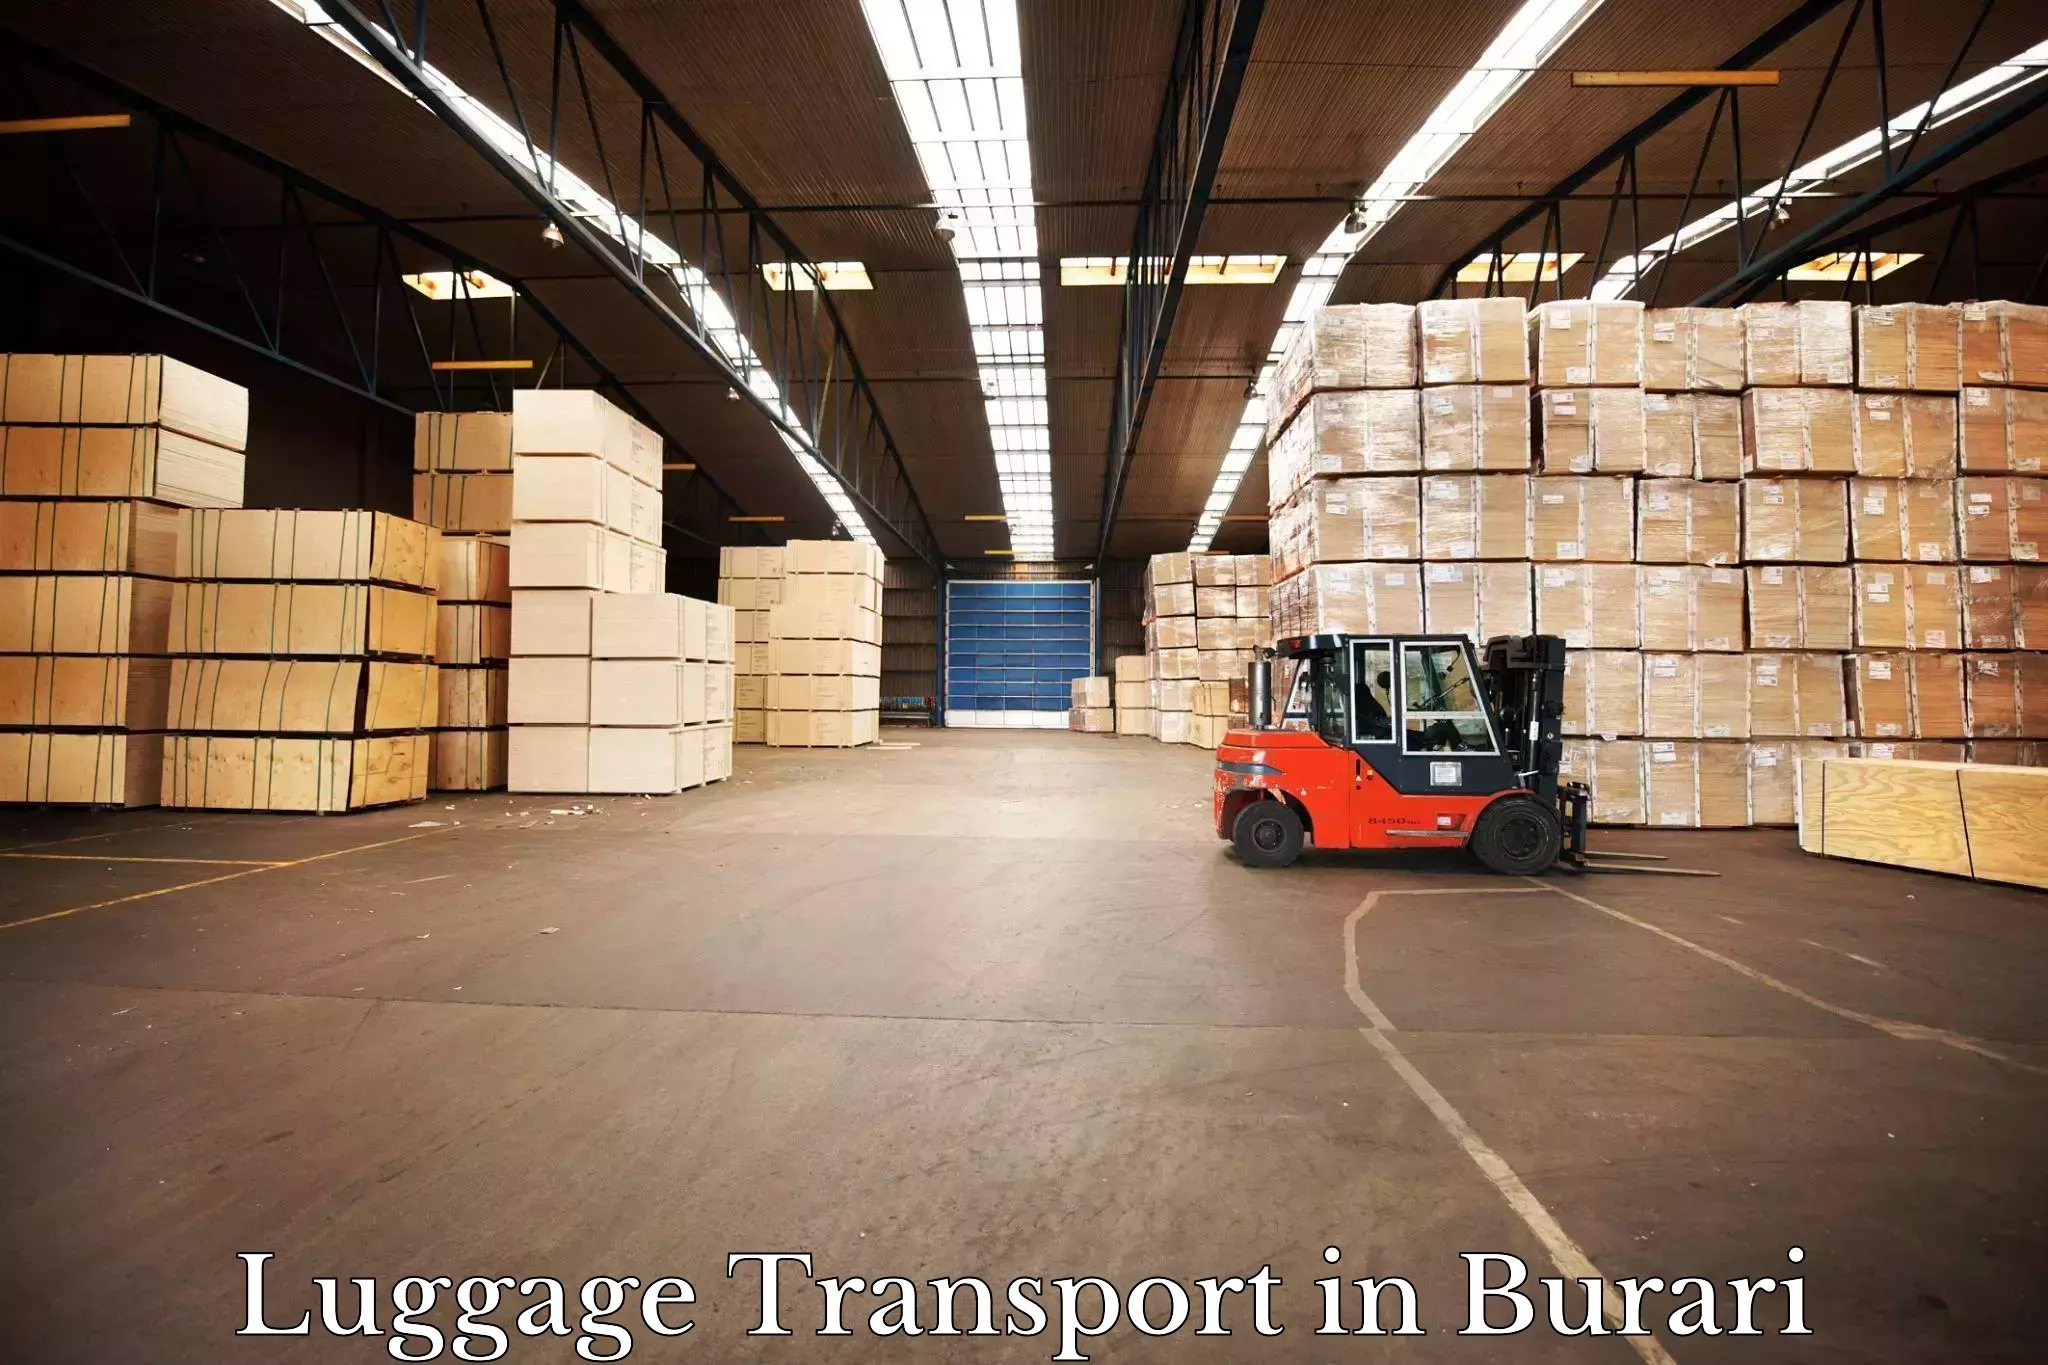 Domestic luggage transport in Burari